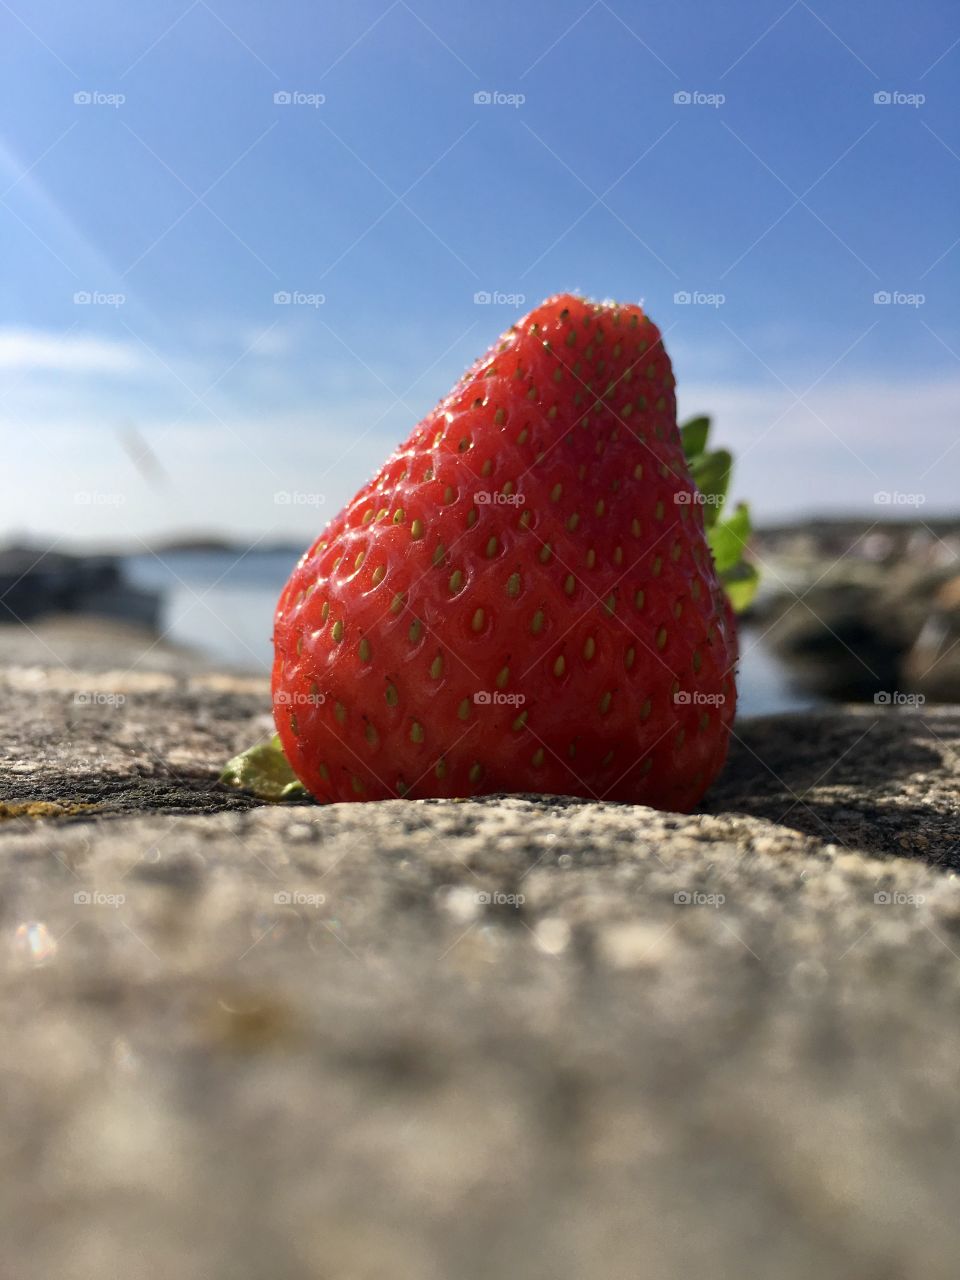 Strawberry close up